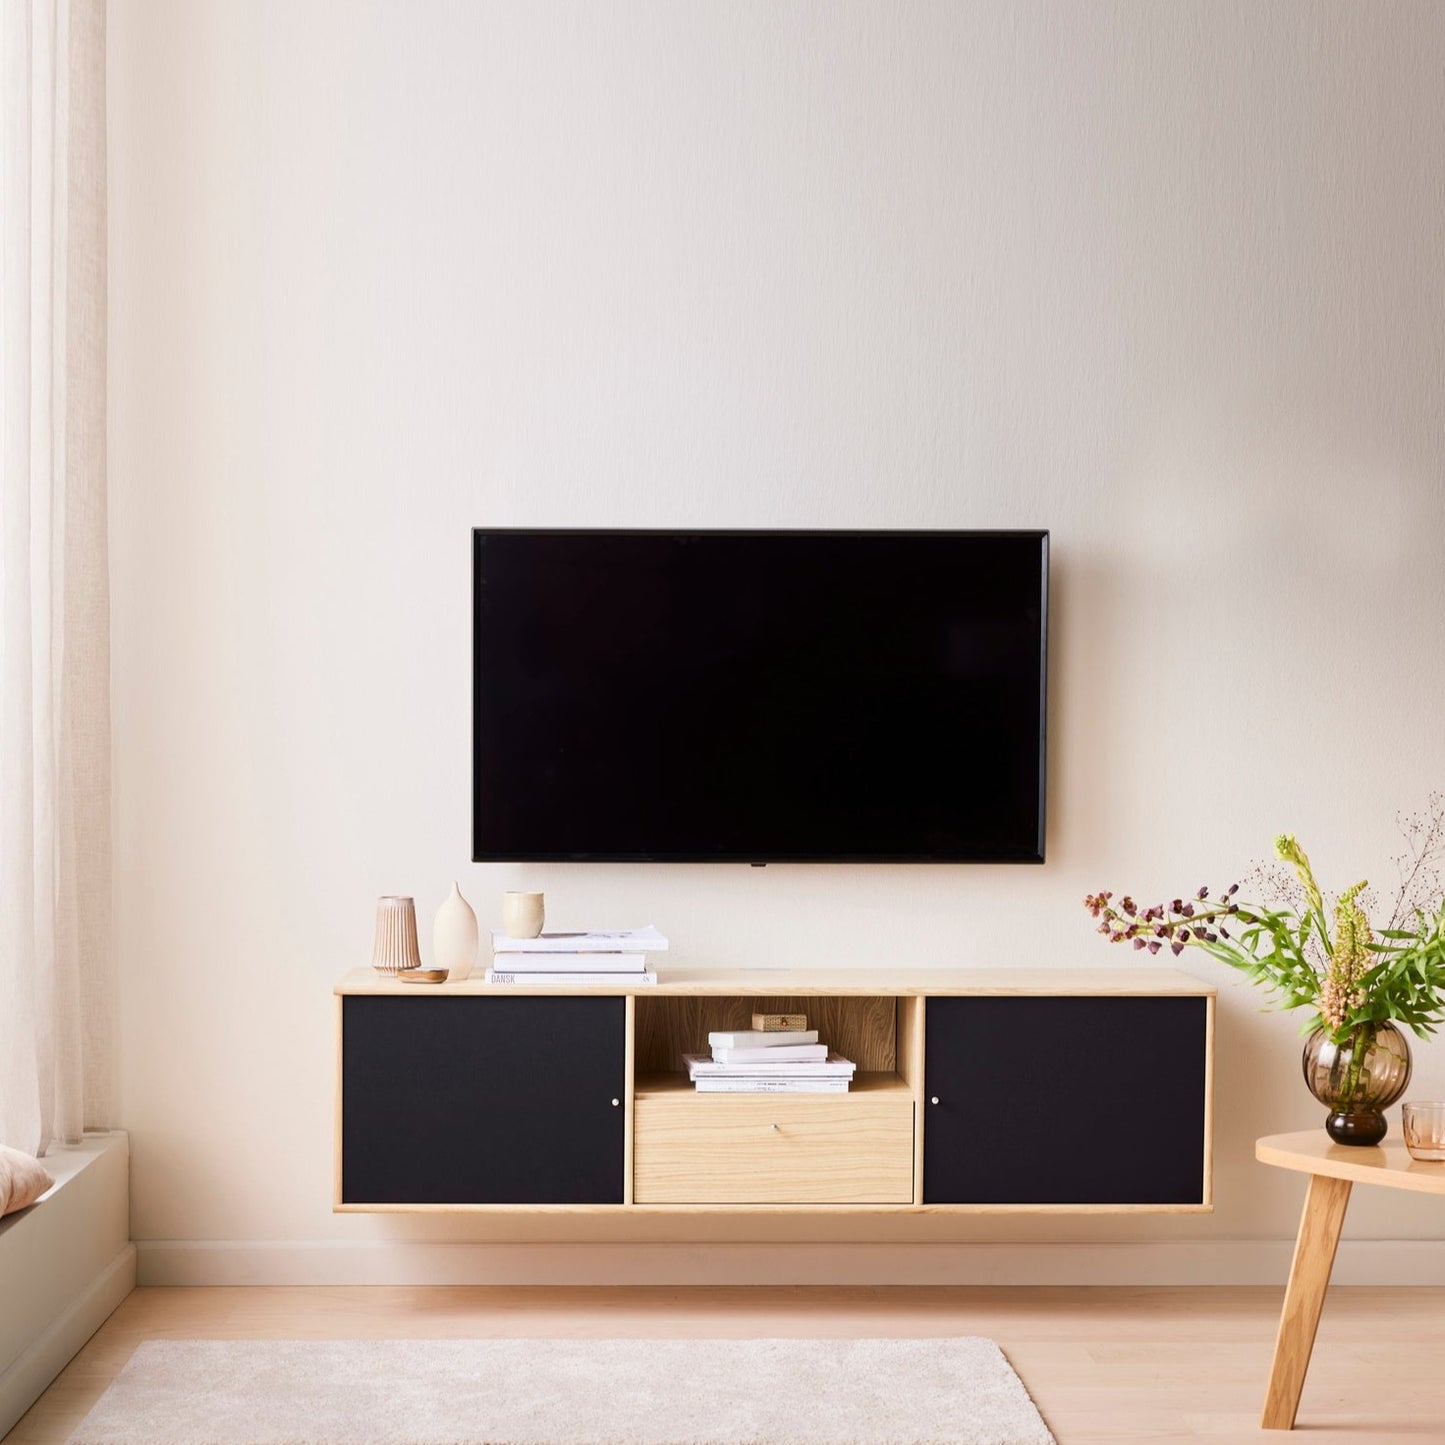 Mistral | TV-bord - AV 232, sorte låger